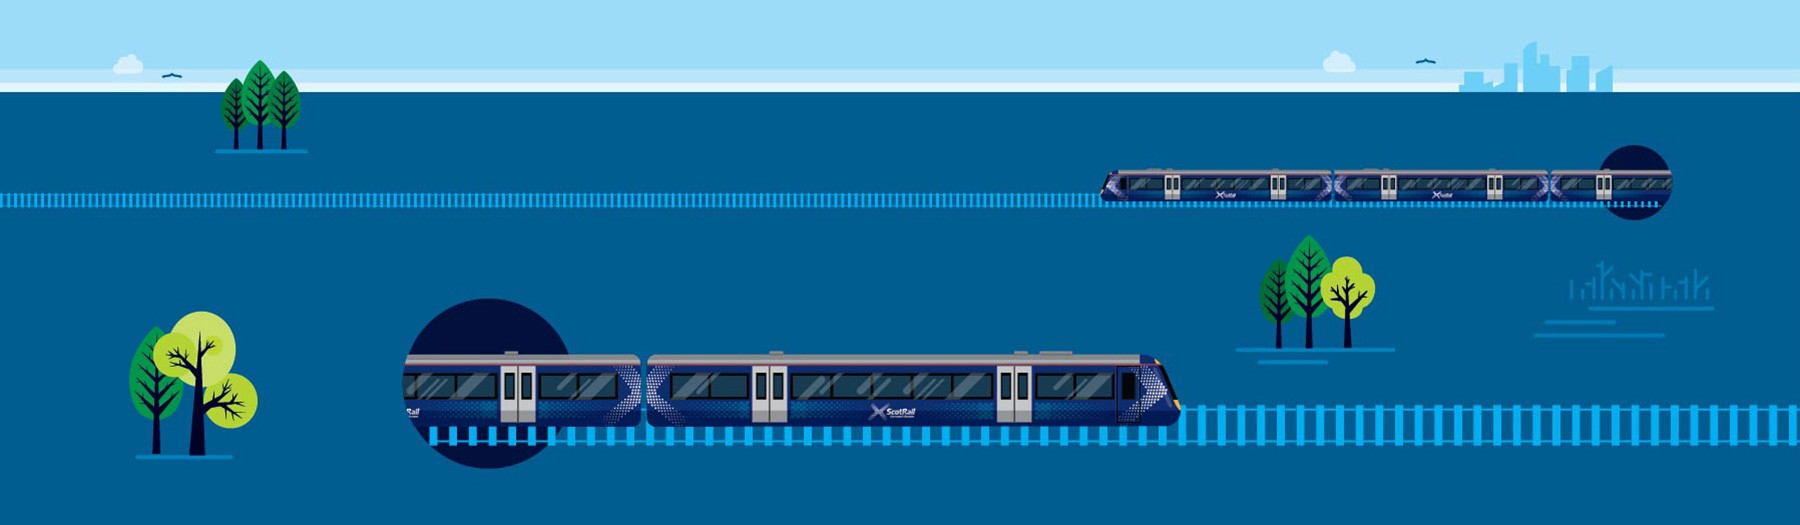 ScotRail trains illustration